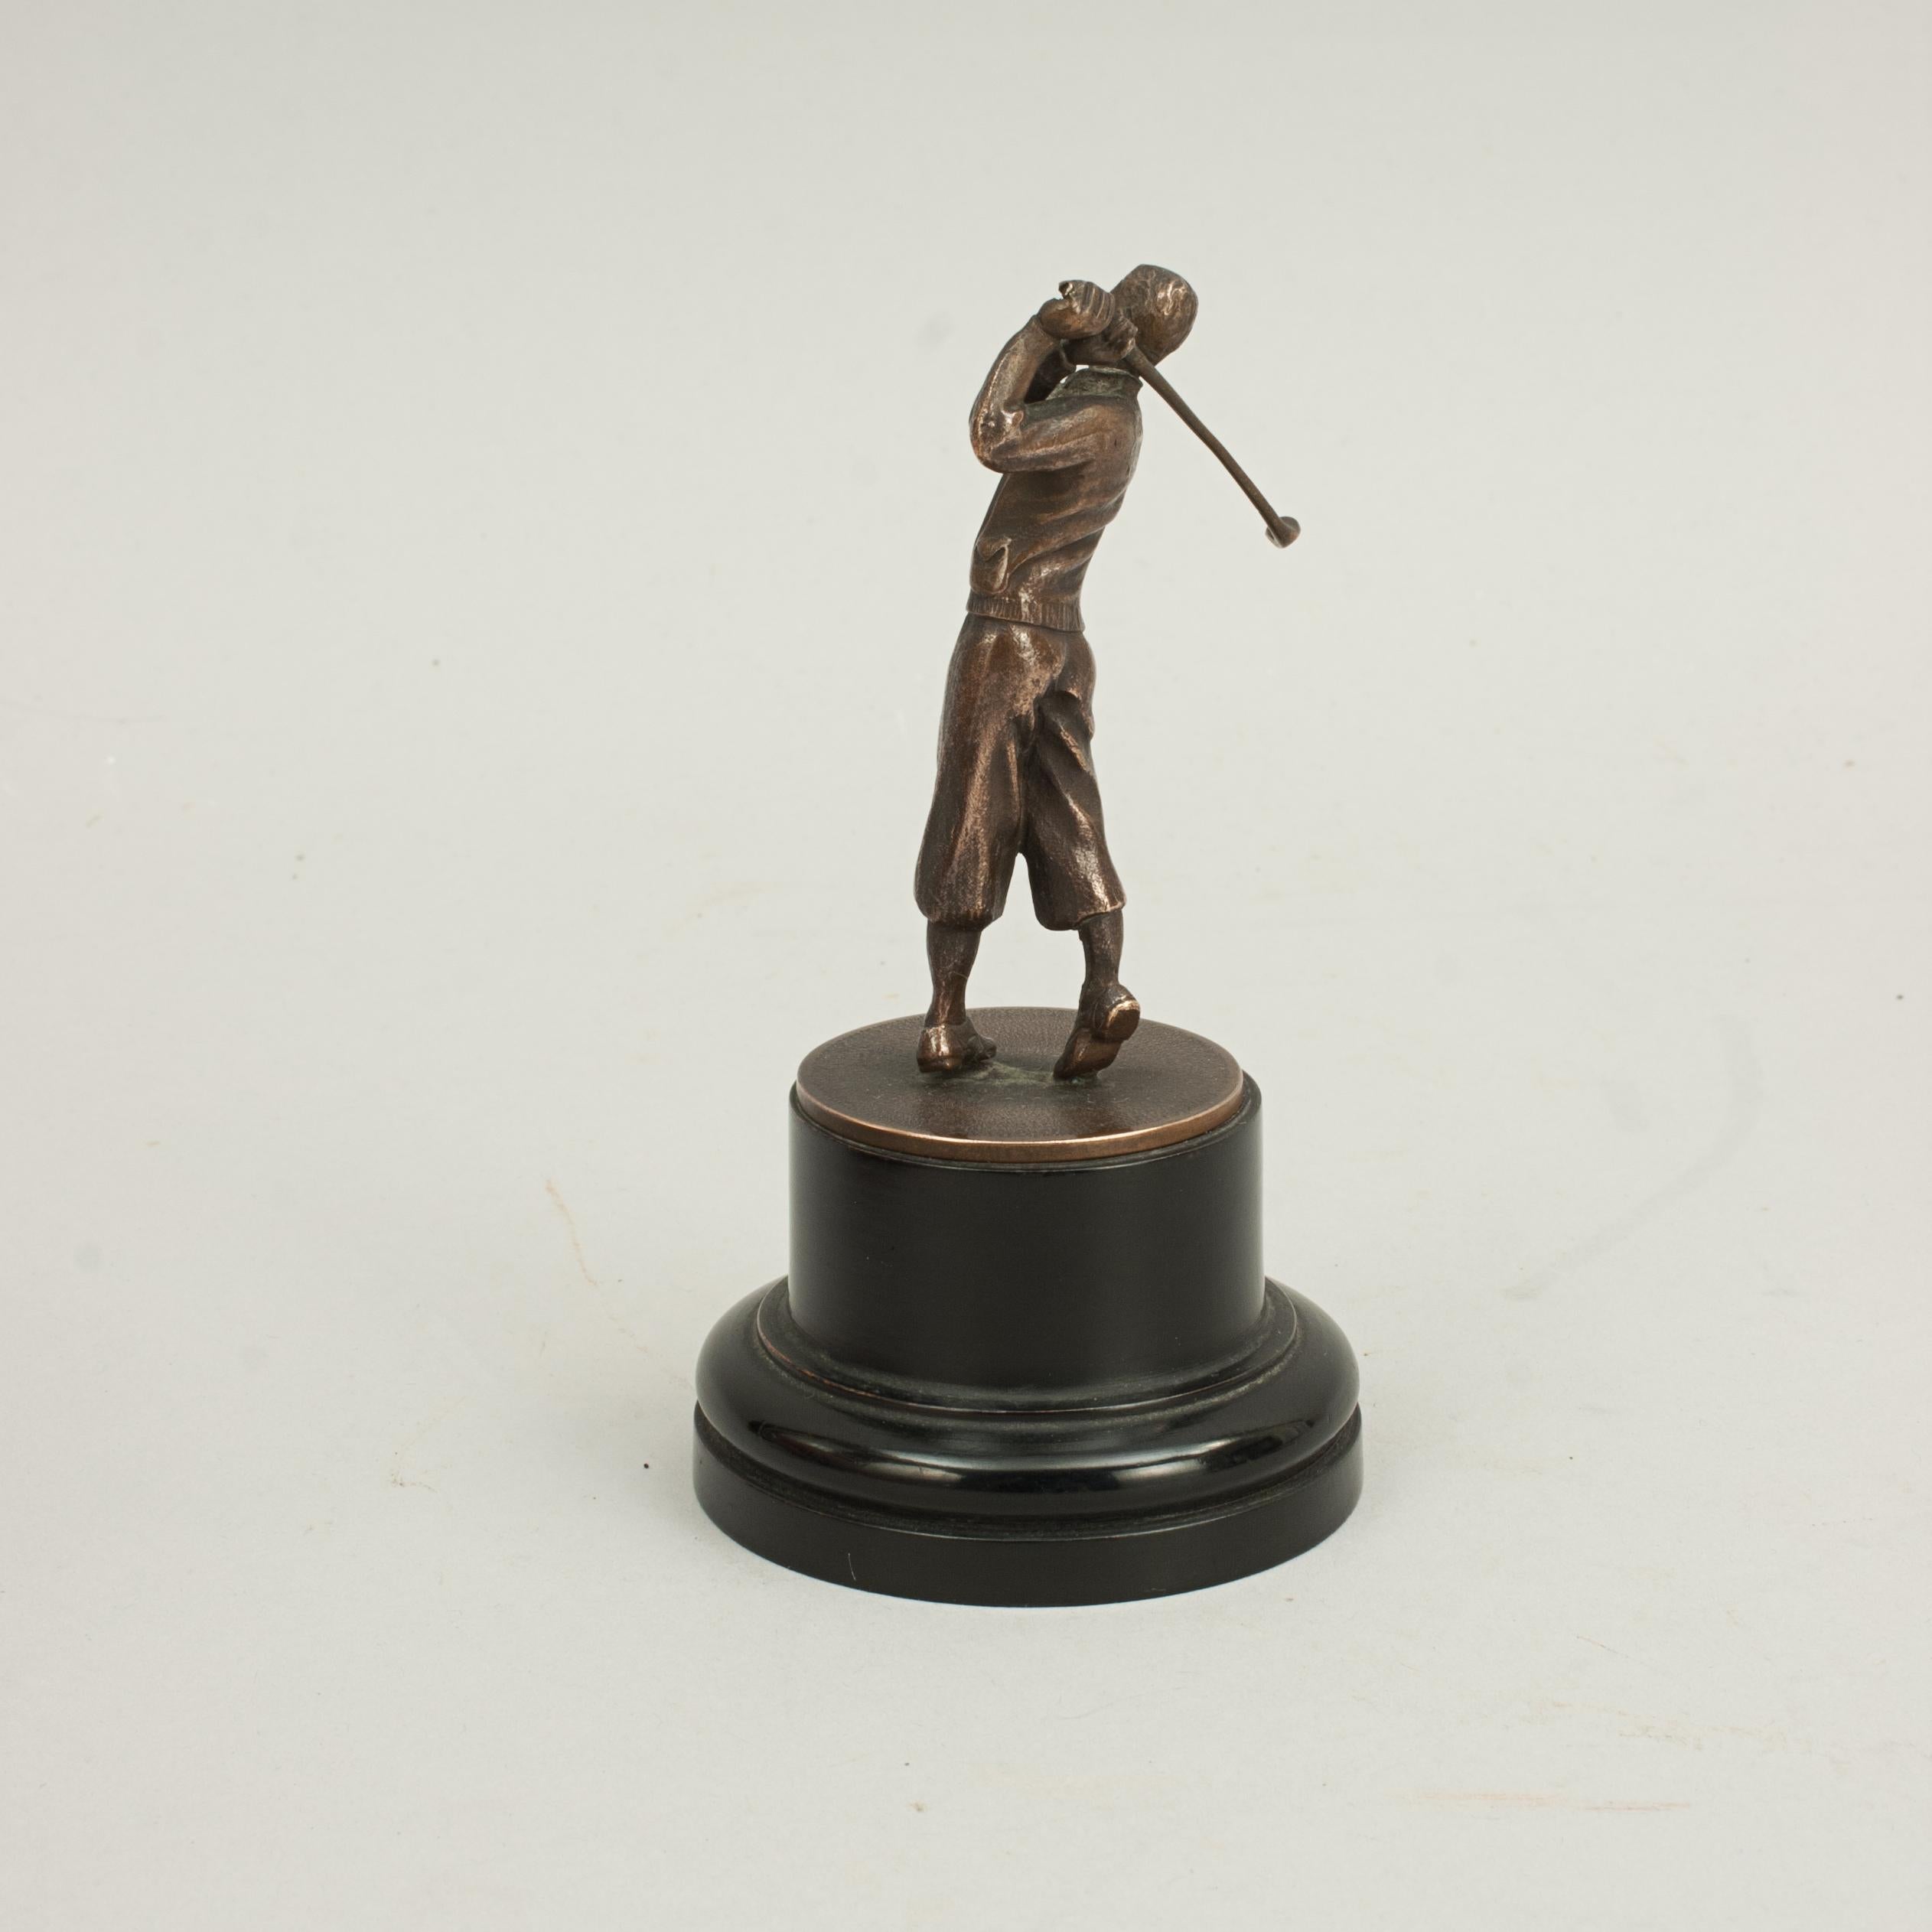 Sporting Art Vintage Golf Figure For Sale